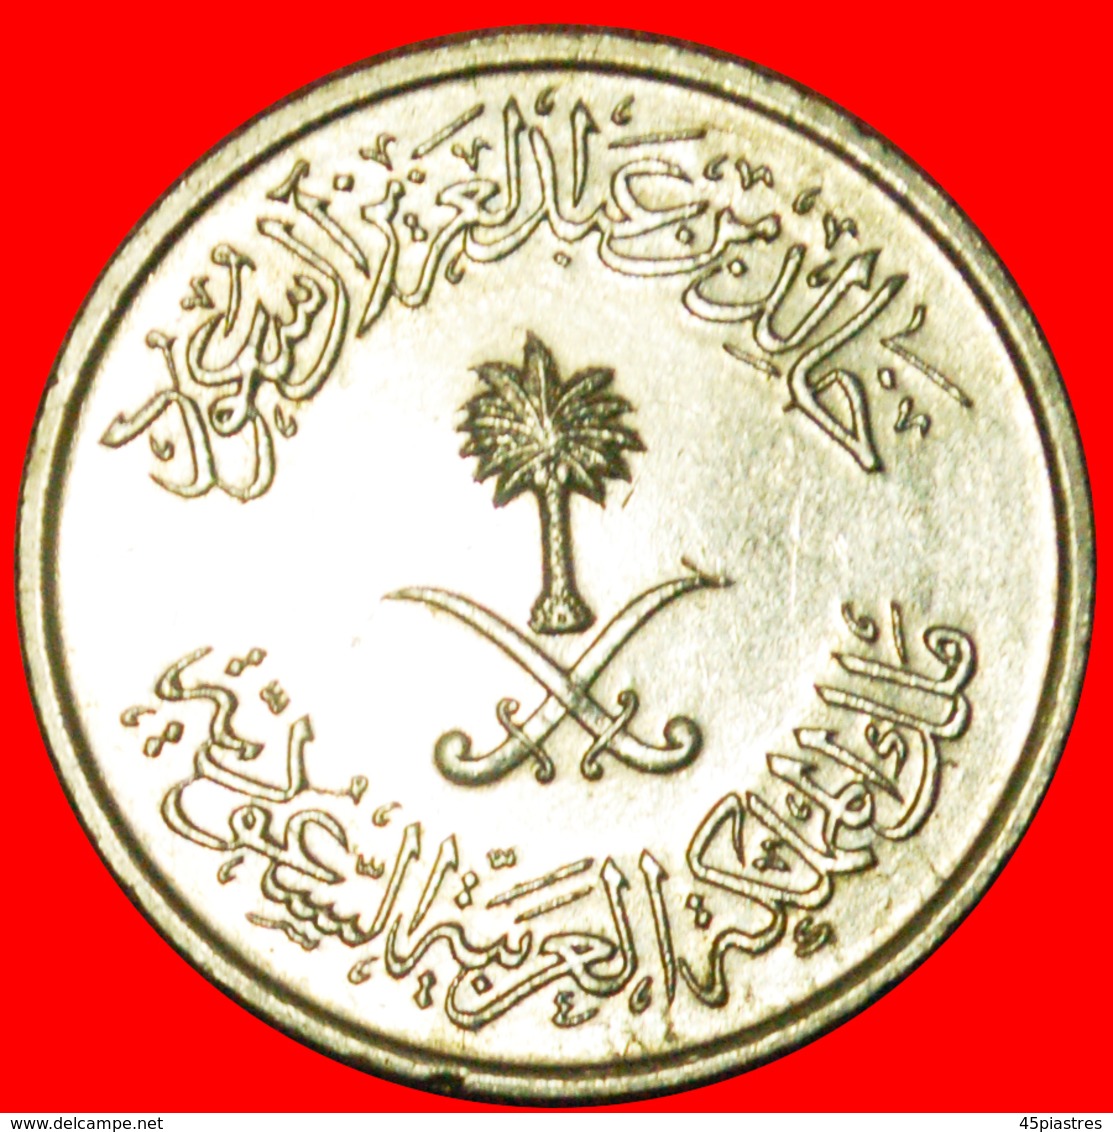 # DAGGERS AND PALMTREE: SAUDI ARABIA ★ 25 HALALA / 1/4  RIYAL 1400 (1980) MINT LUSTER! LOW START ★ NO RESERVE! - Arabia Saudita